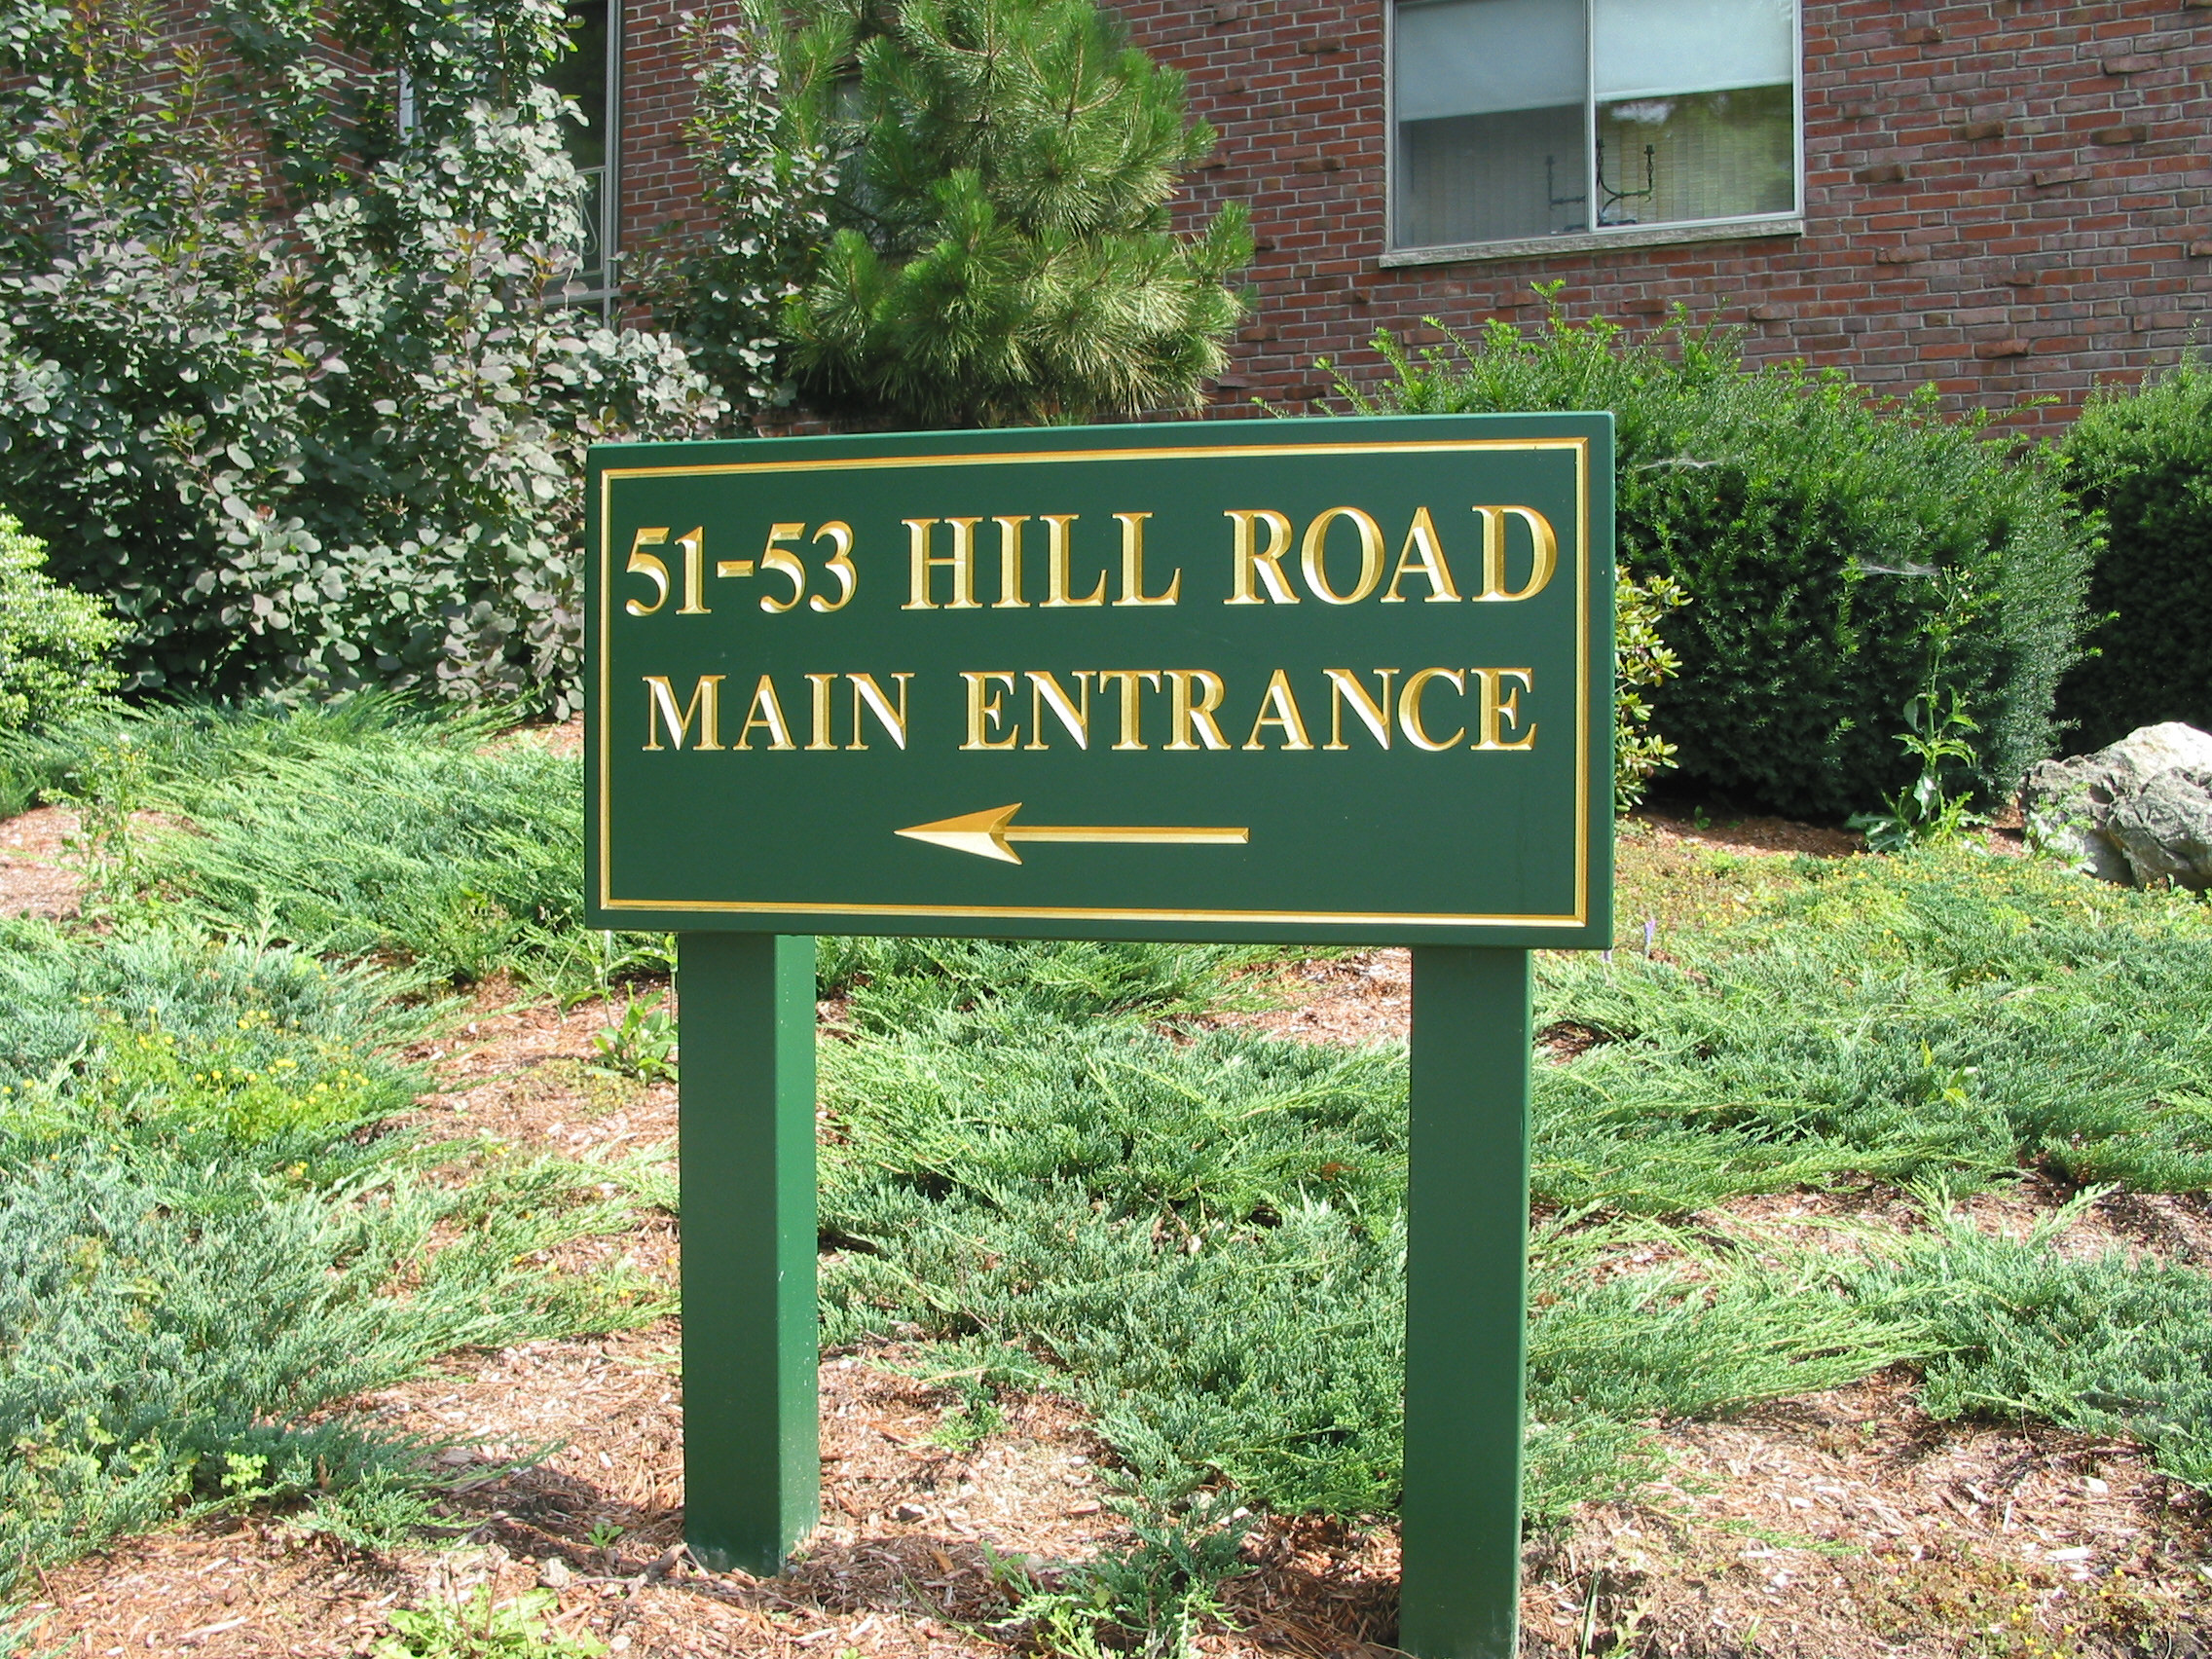 51-53 Hill Road